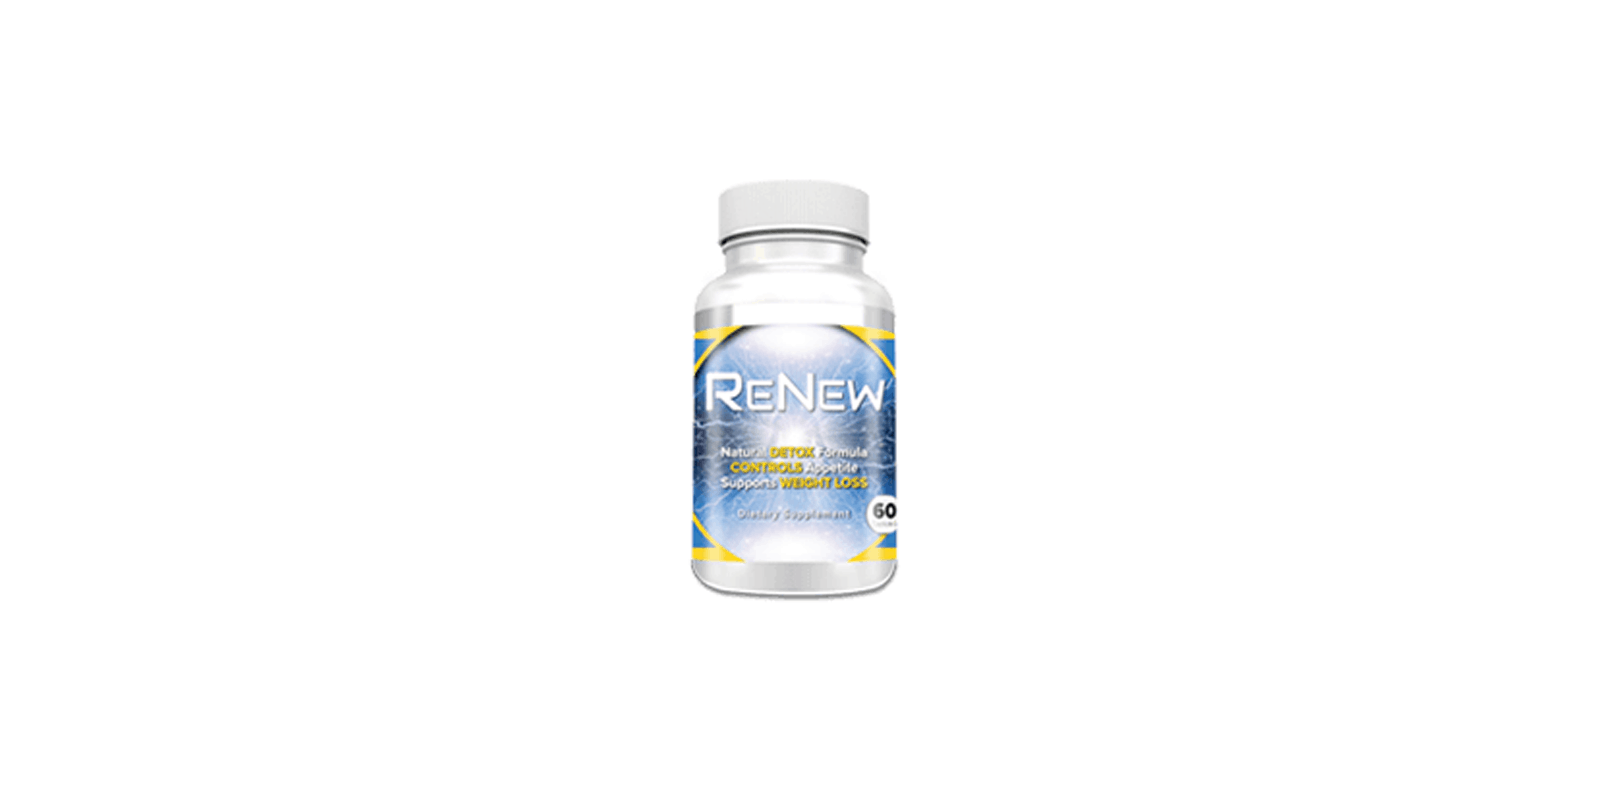 ReNew Supplement reviews